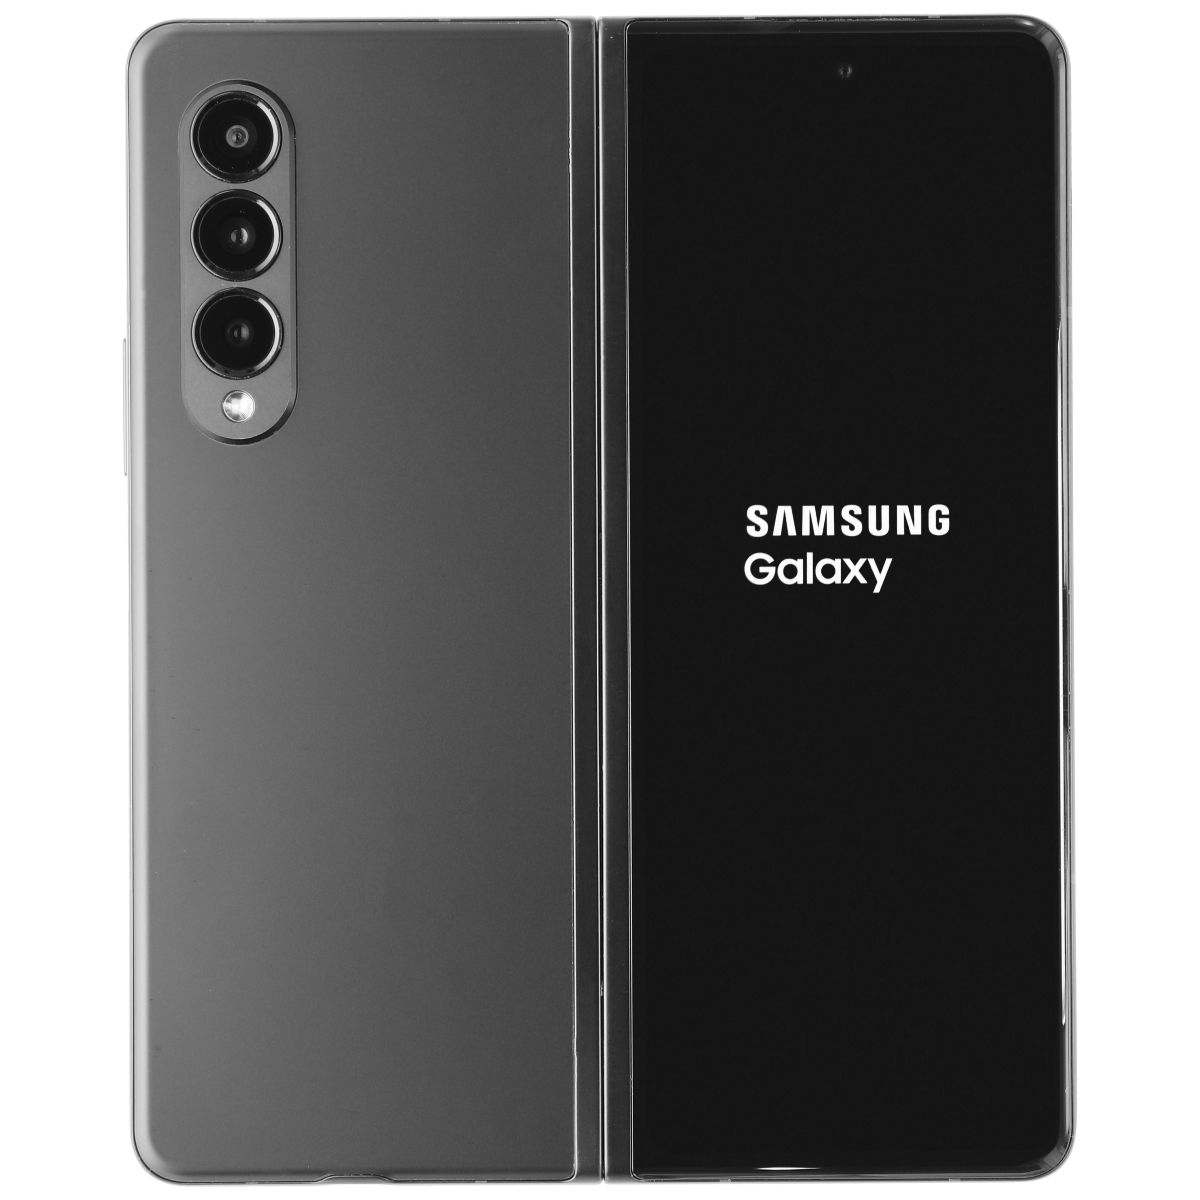 DEMO Samsung Galaxy Z Fold3 5G (7.6-in) (SM-F926U1) Unlocked - 256B/Black Cell Phones & Smartphones Samsung    - Simple Cell Bulk Wholesale Pricing - USA Seller